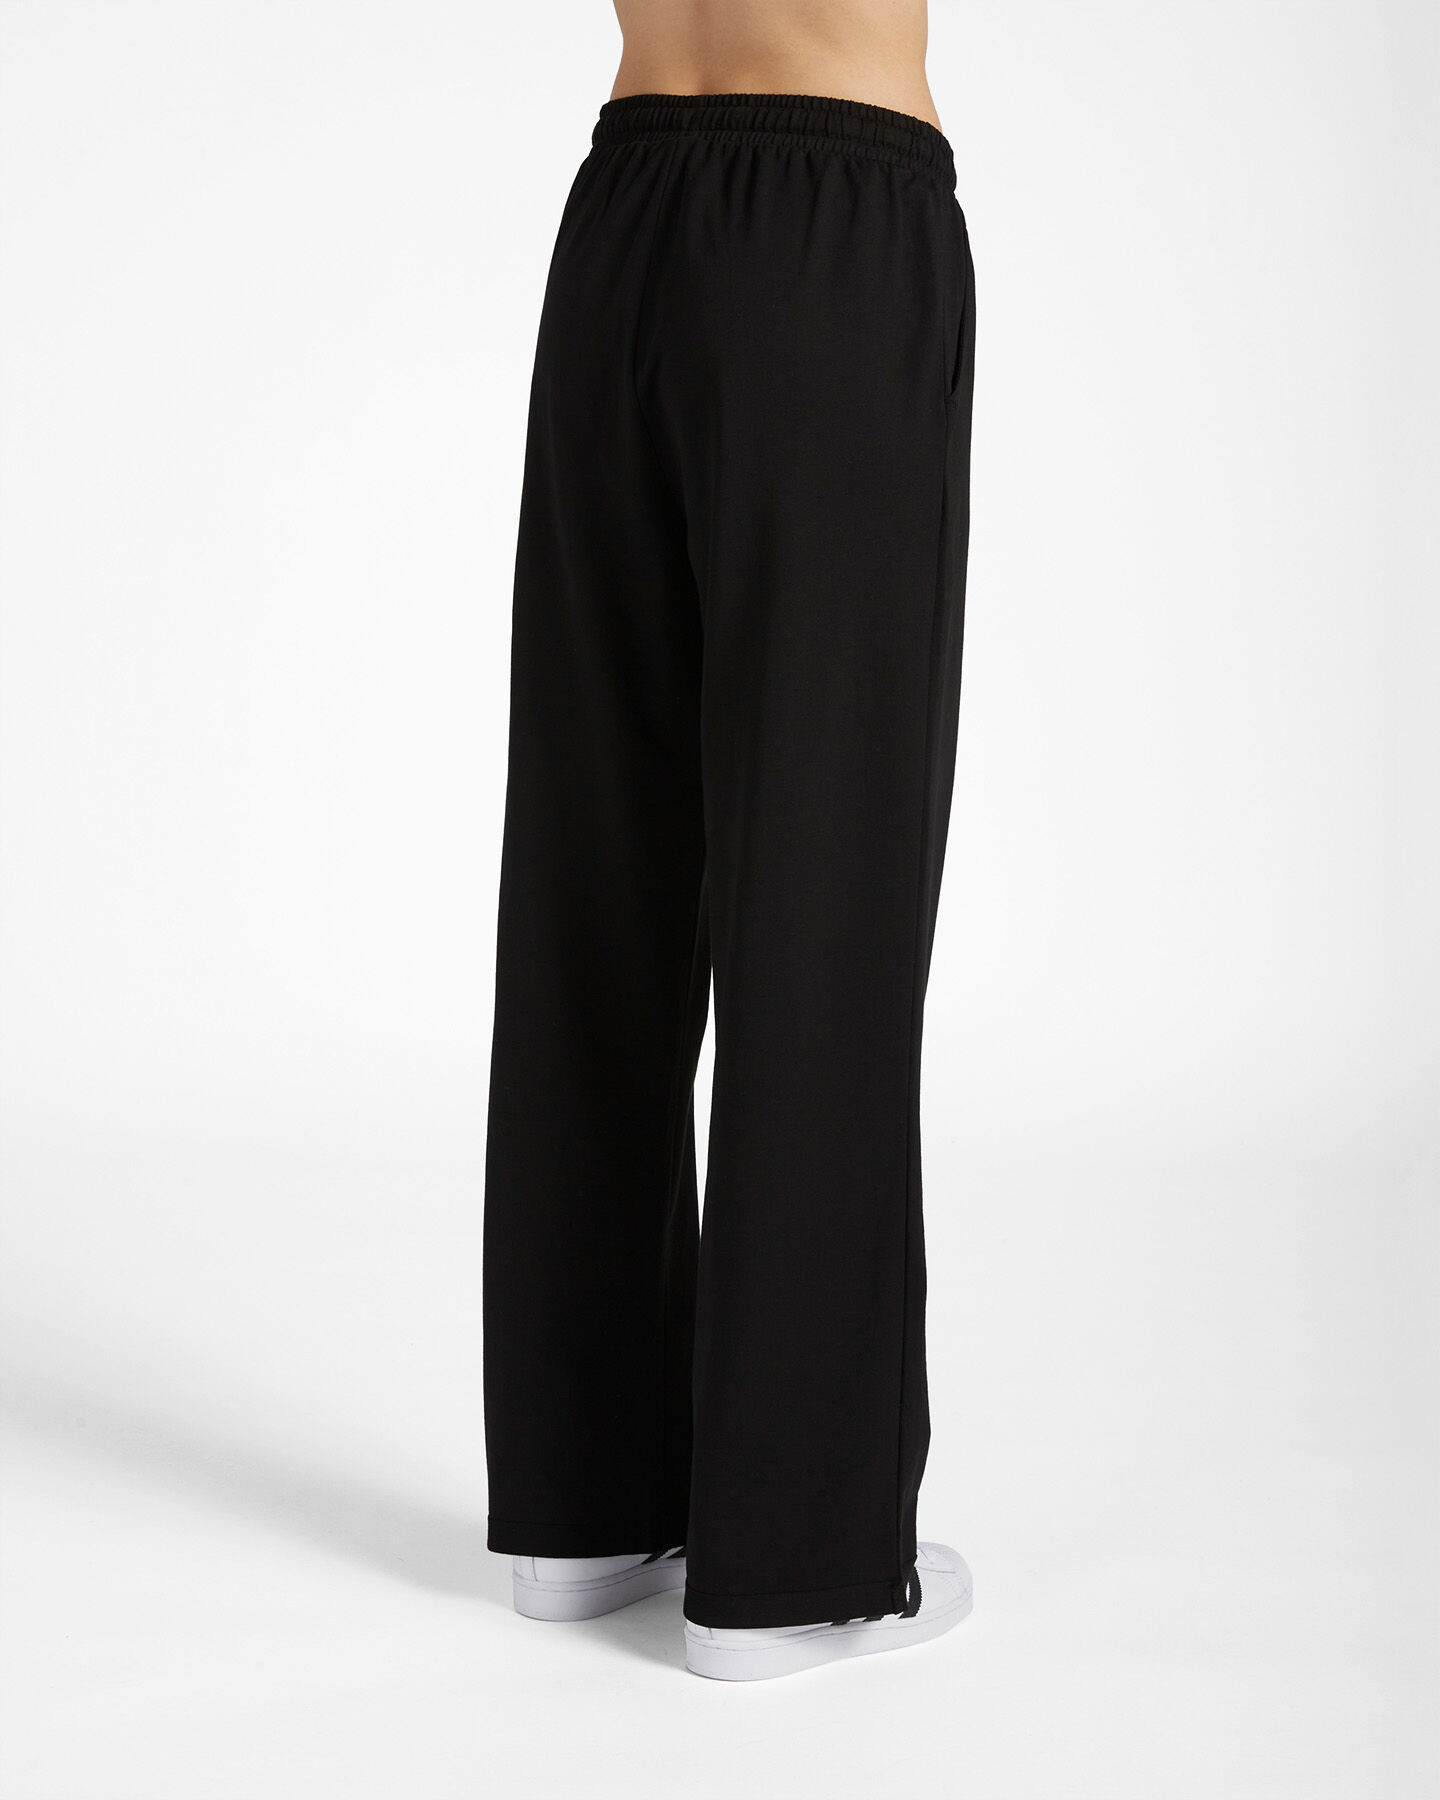  Pantalone ELLESSE BETTER W S4102524|050|XS scatto 1